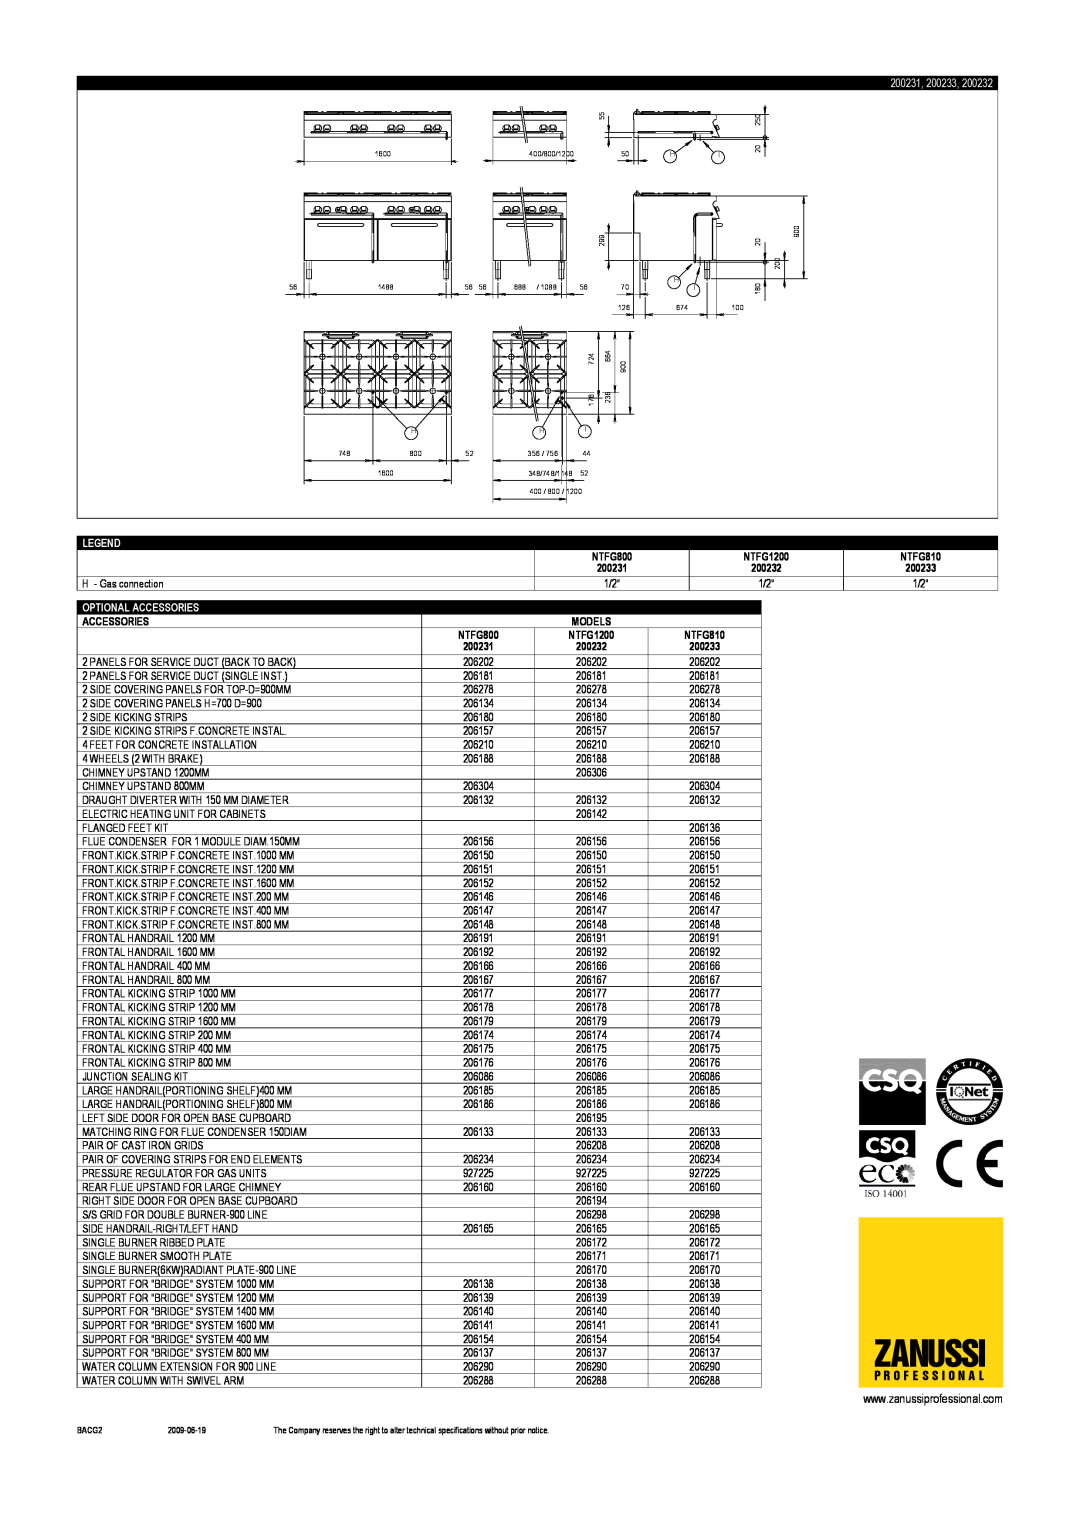 Electrolux NTFG800, 200232 dimensions Zanussi, 200231, 200233, NTFG1200, NTFG810, Optional Accessories, Models 